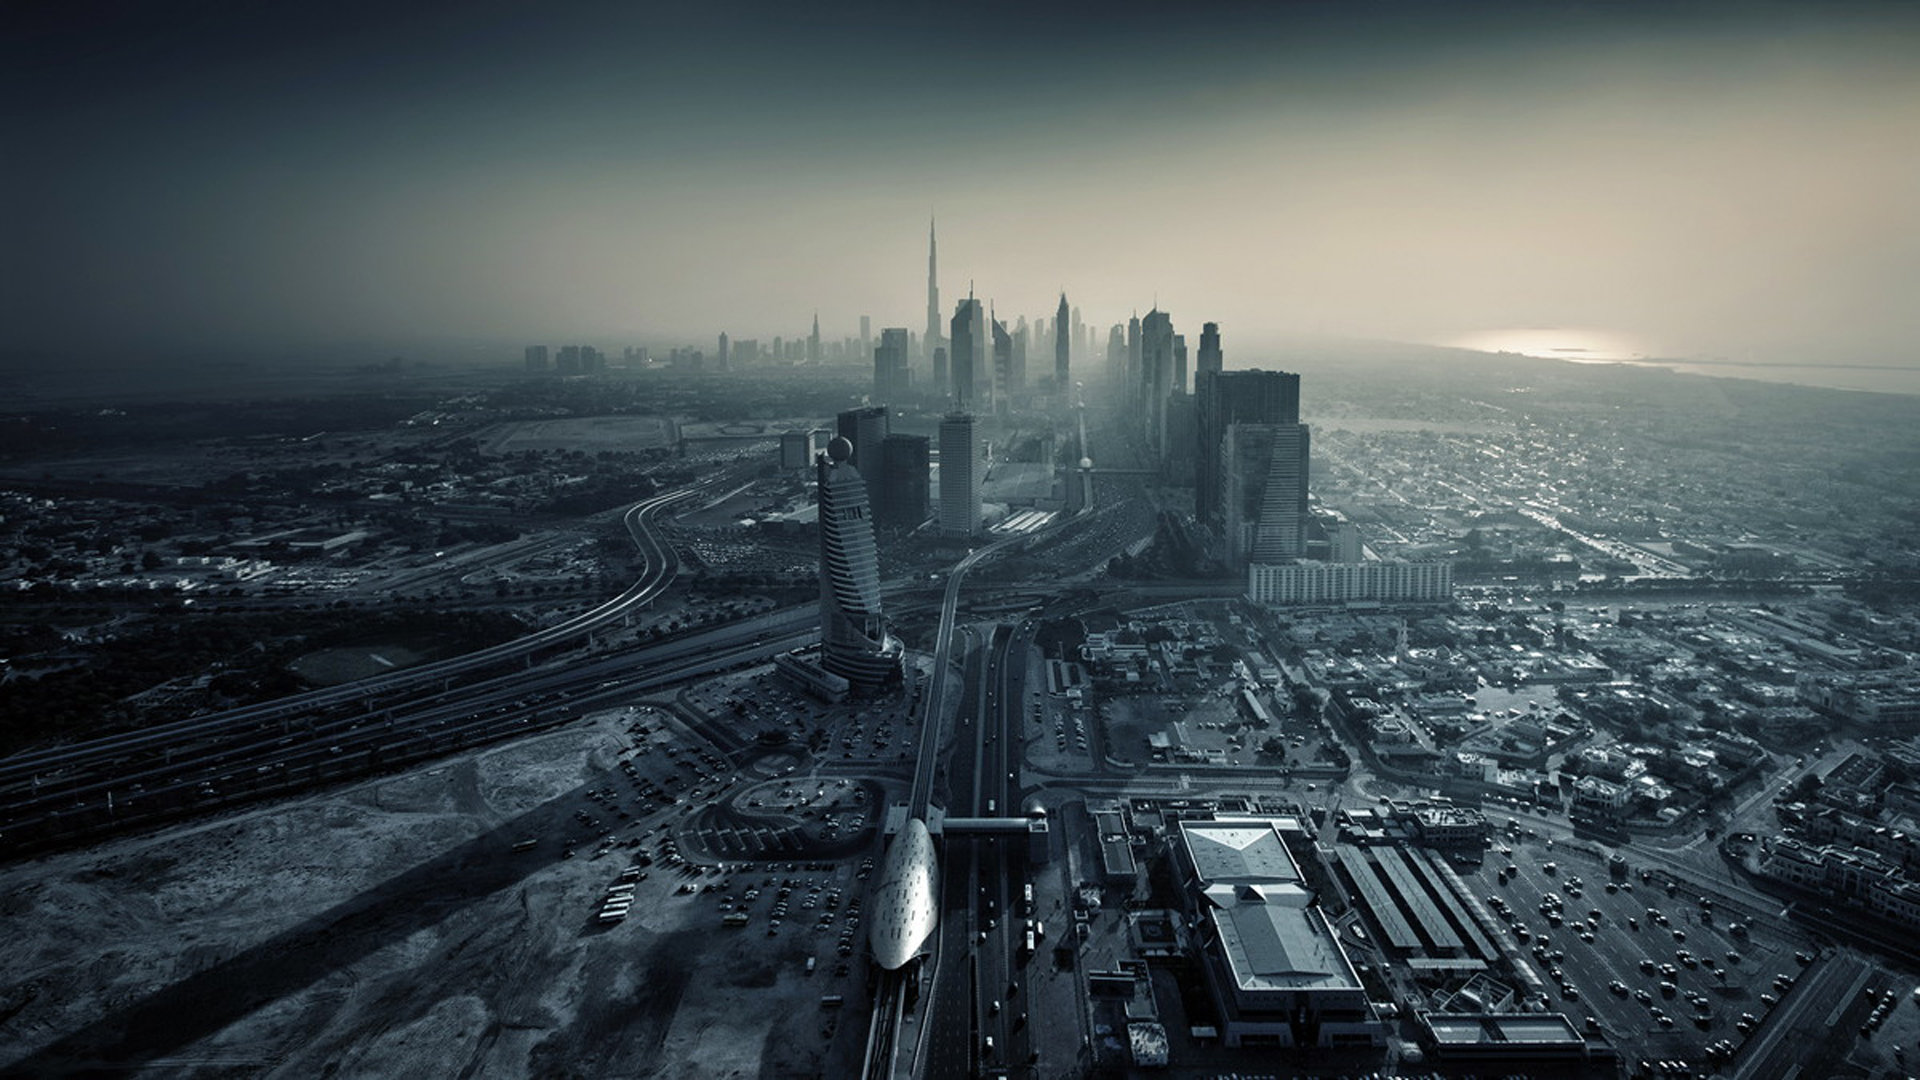 emirati arabi uniti,area metropolitana,paesaggio urbano,area urbana,città,grattacielo